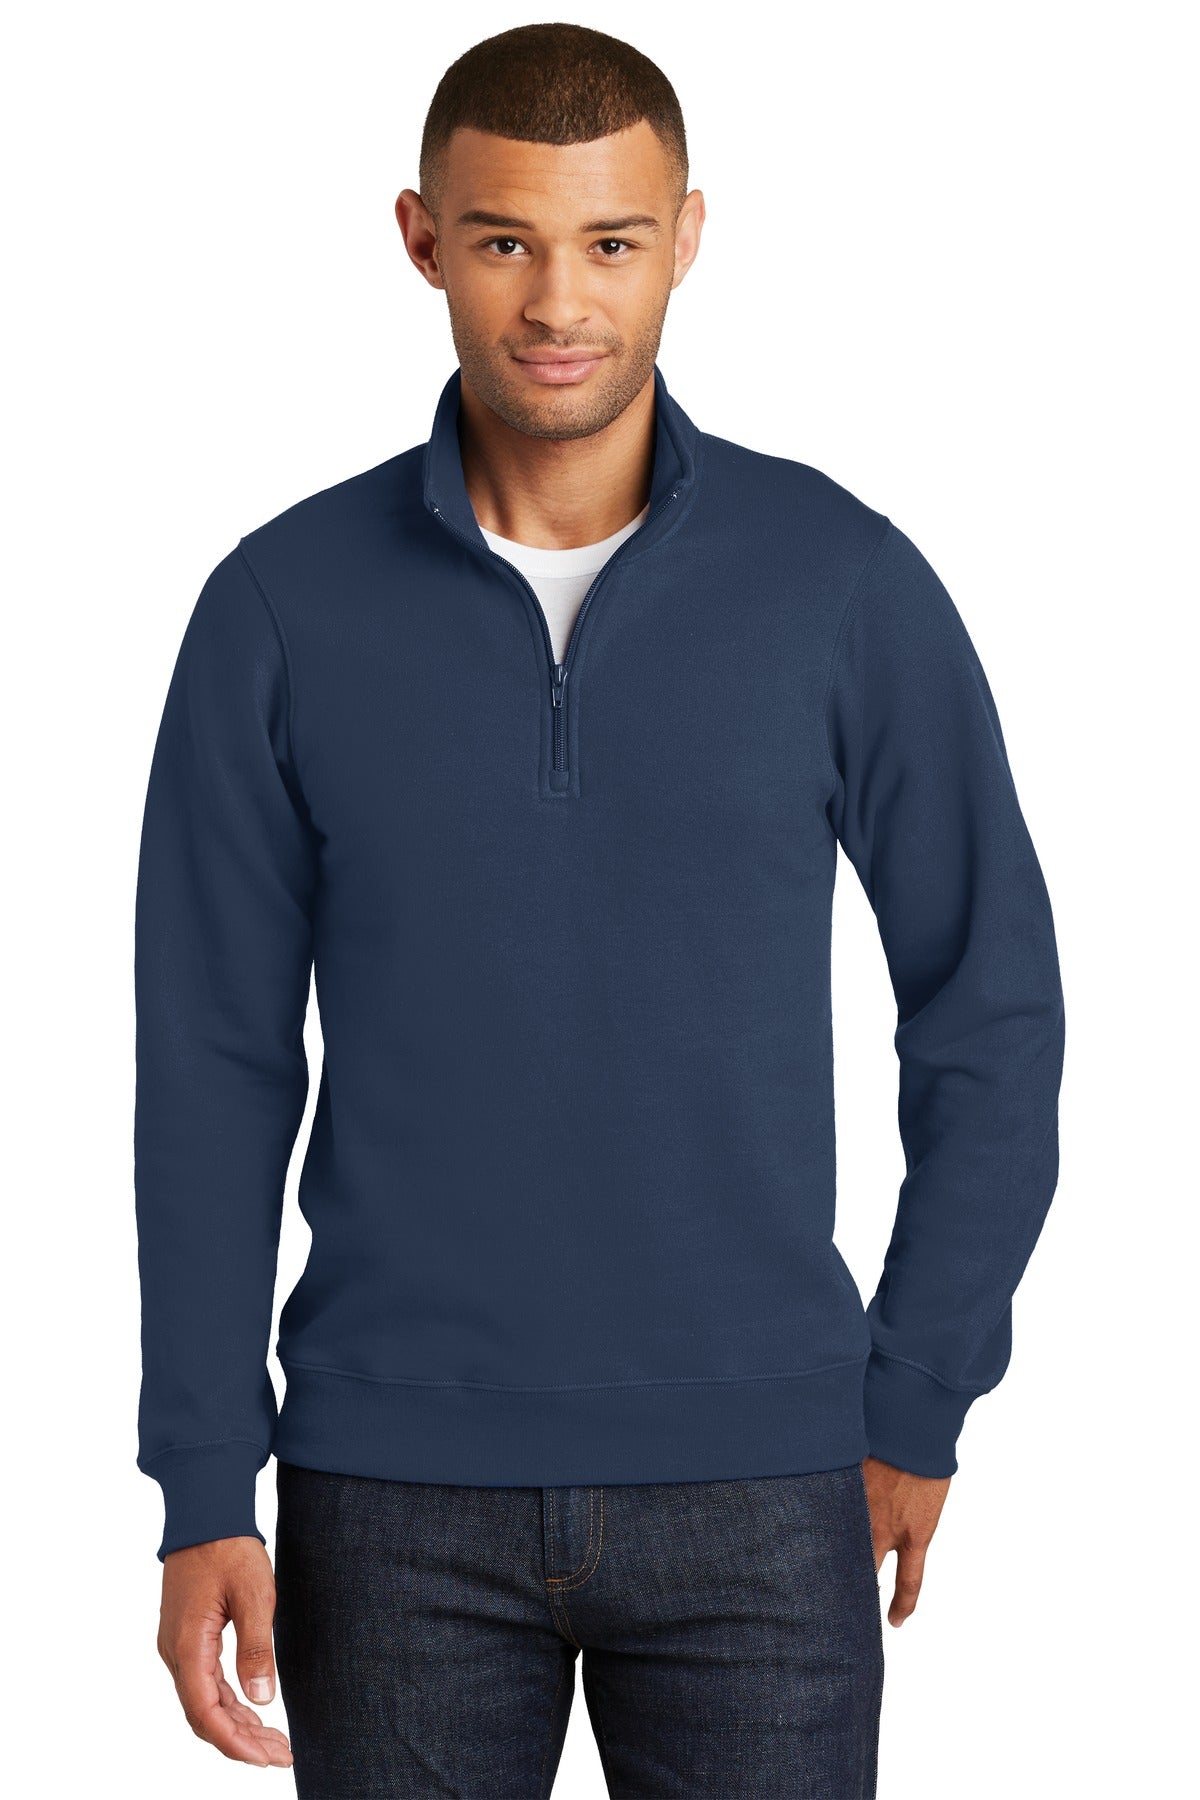 Sweatshirts/Fleece Team Navy Port & Company